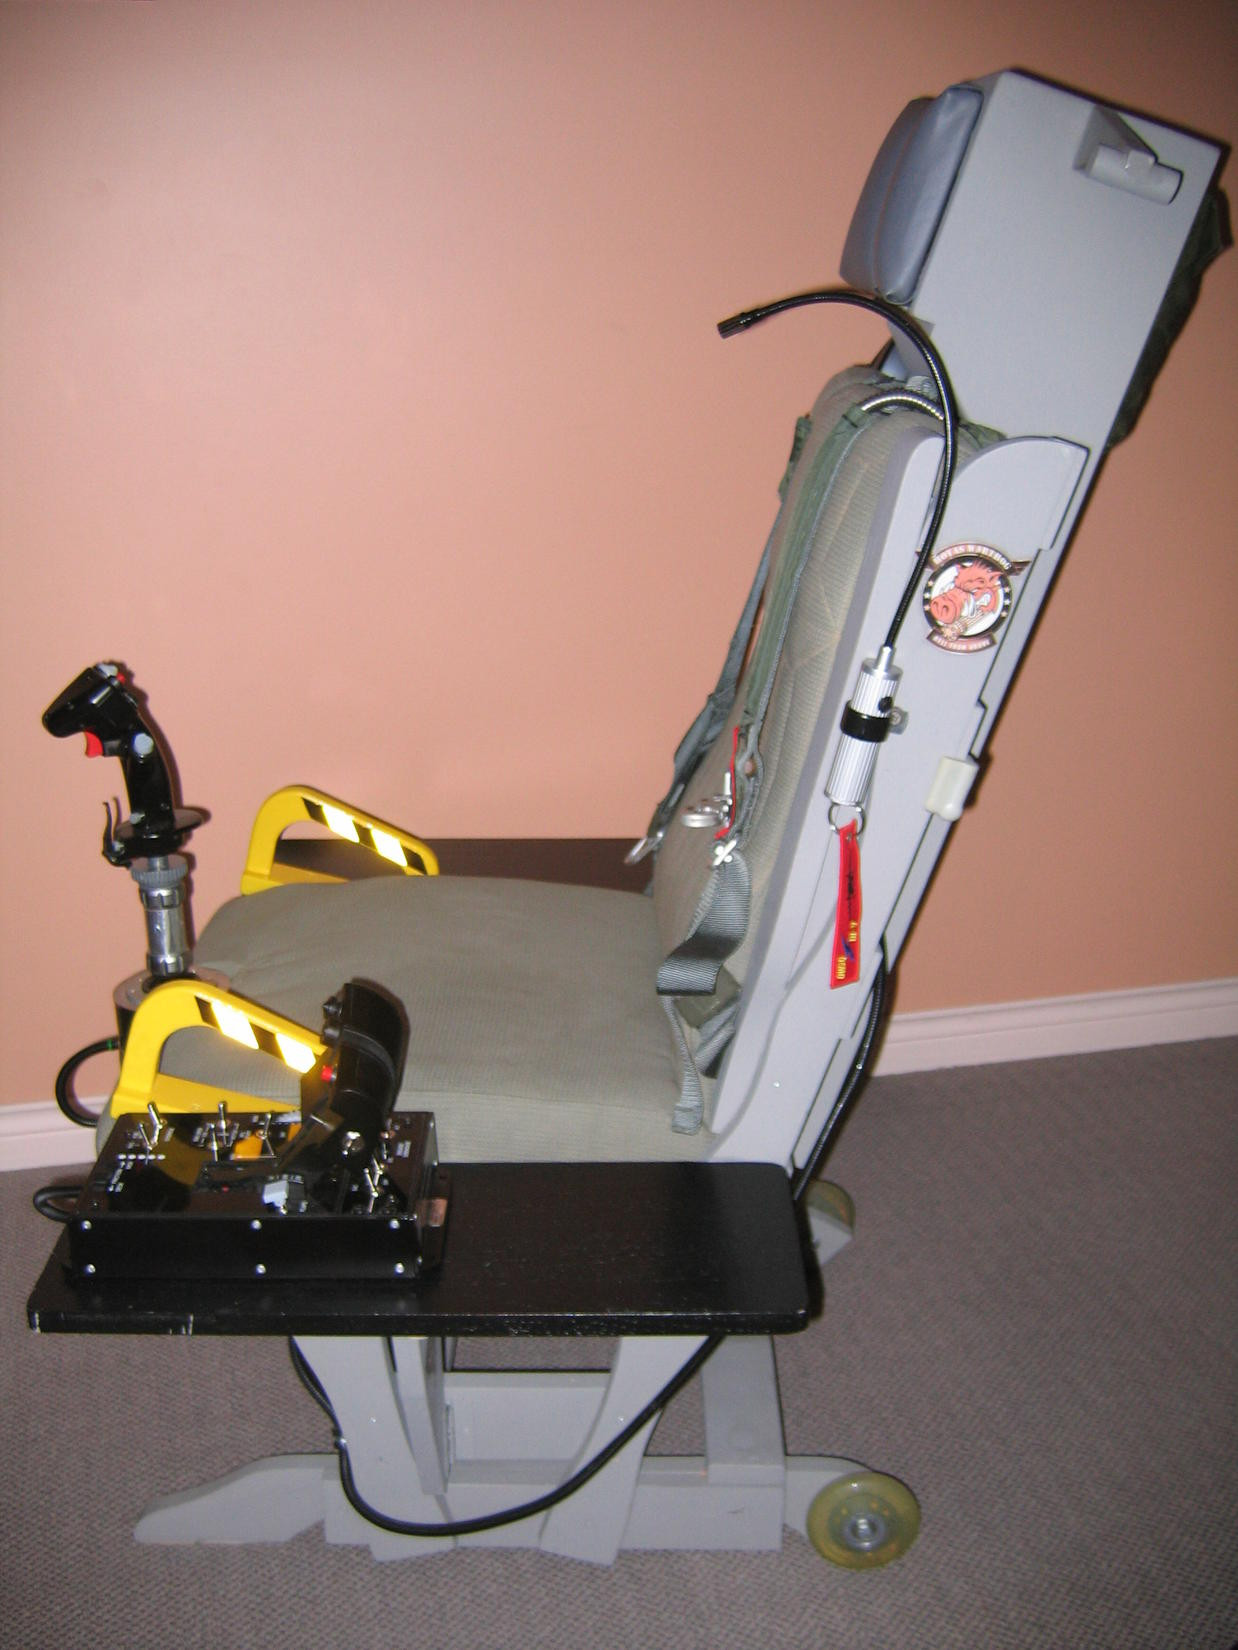 Best ideas about Flight Sim Chair DIY
. Save or Pin TM Warthog Glider Rocker Sim Seat Mod SimHQ Forums Now.